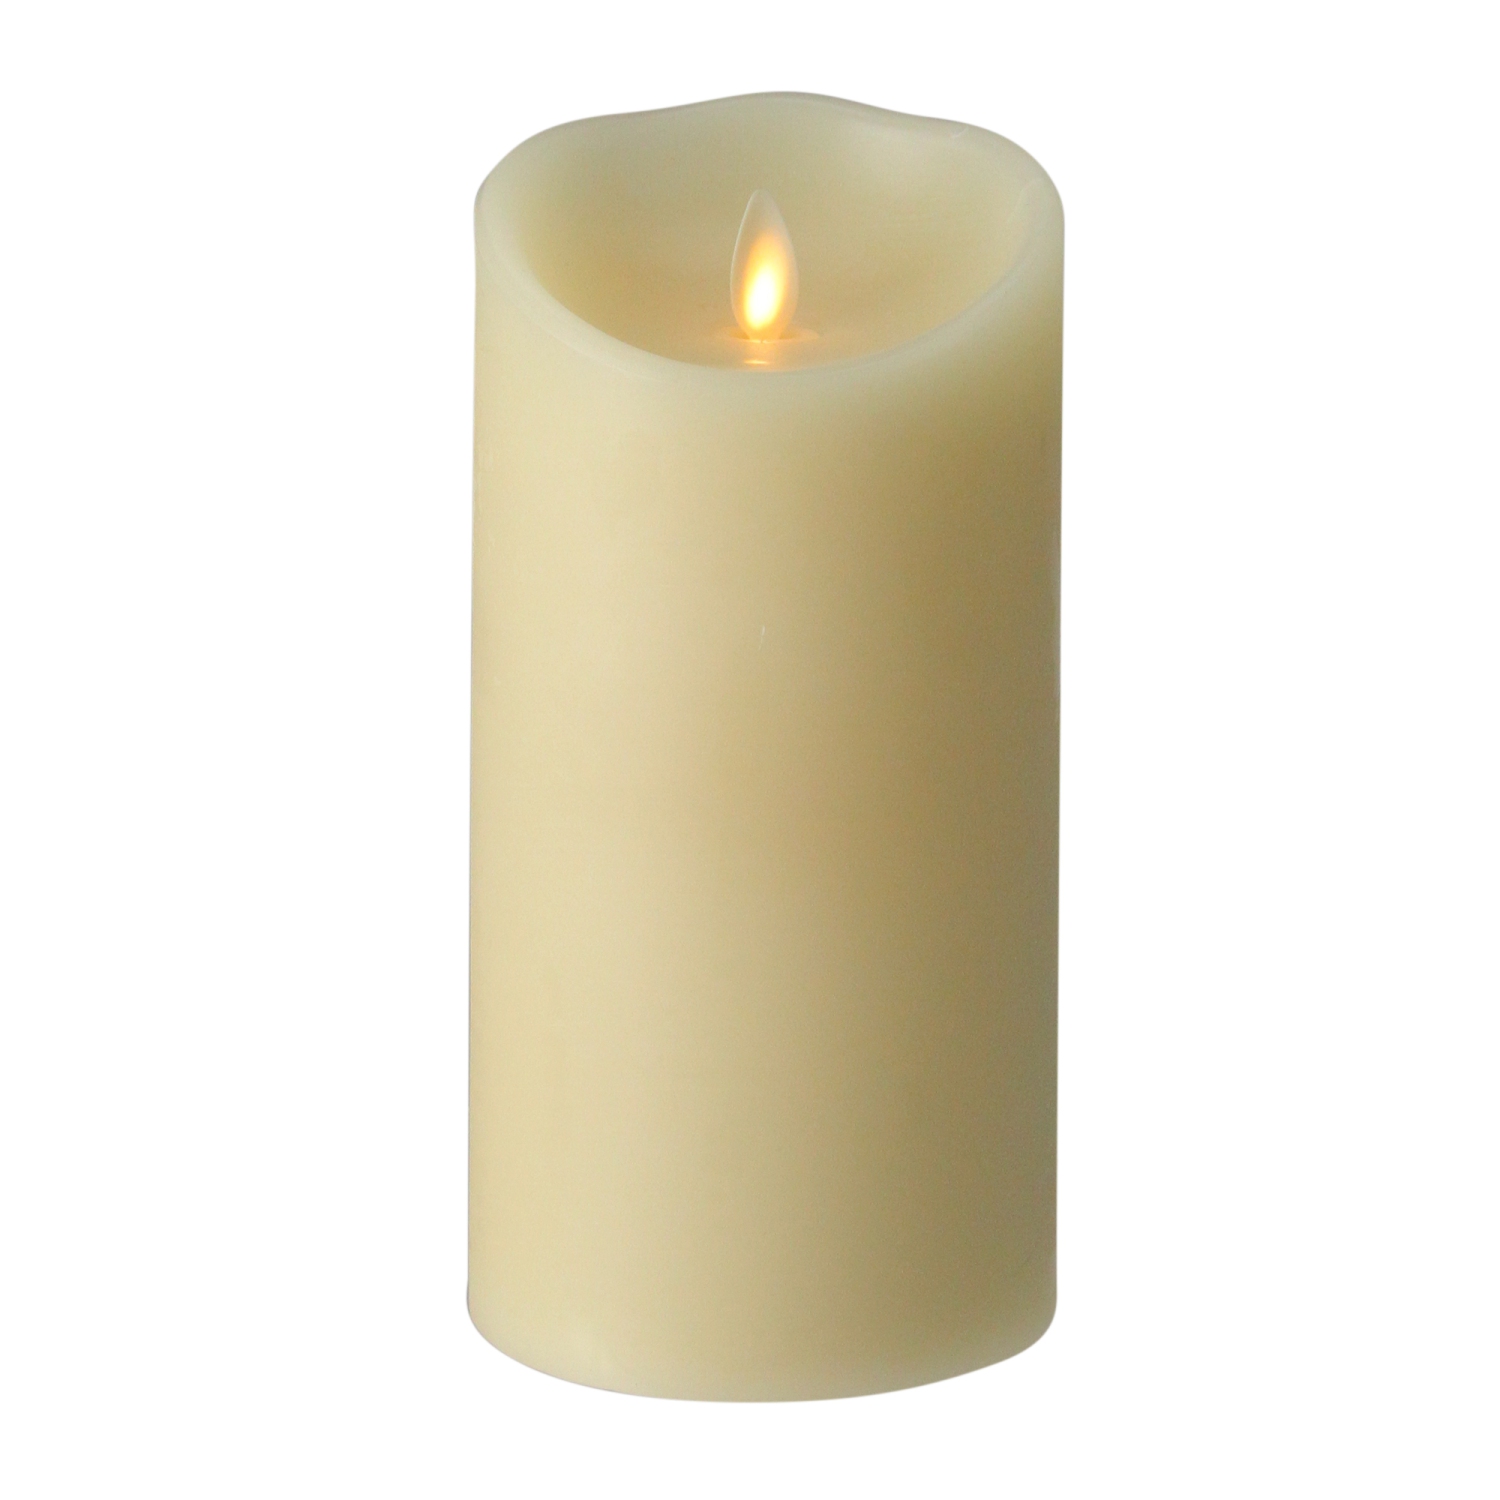 7" Ivory Luminara Flickering Flameless LED Lighted Vanilla Scented Pillar Candle